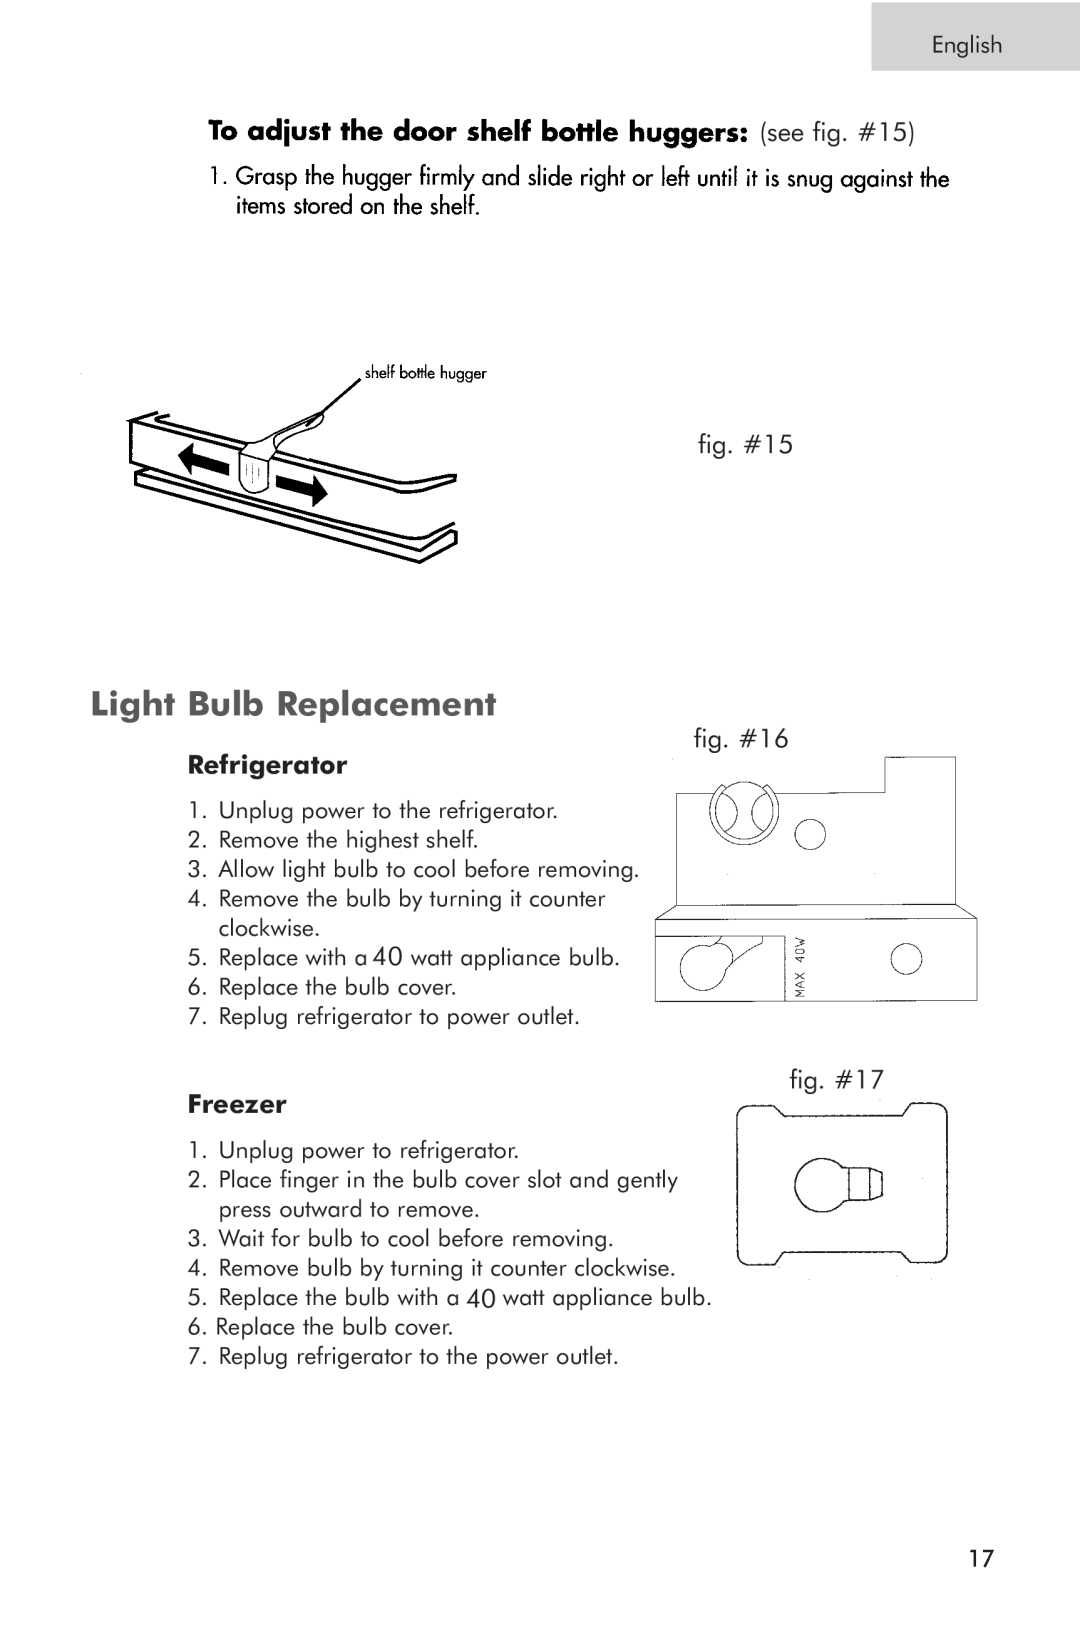 Haier PRTS, RRTG manual Light Bulb Replacement, Refrigerator, Freezer 